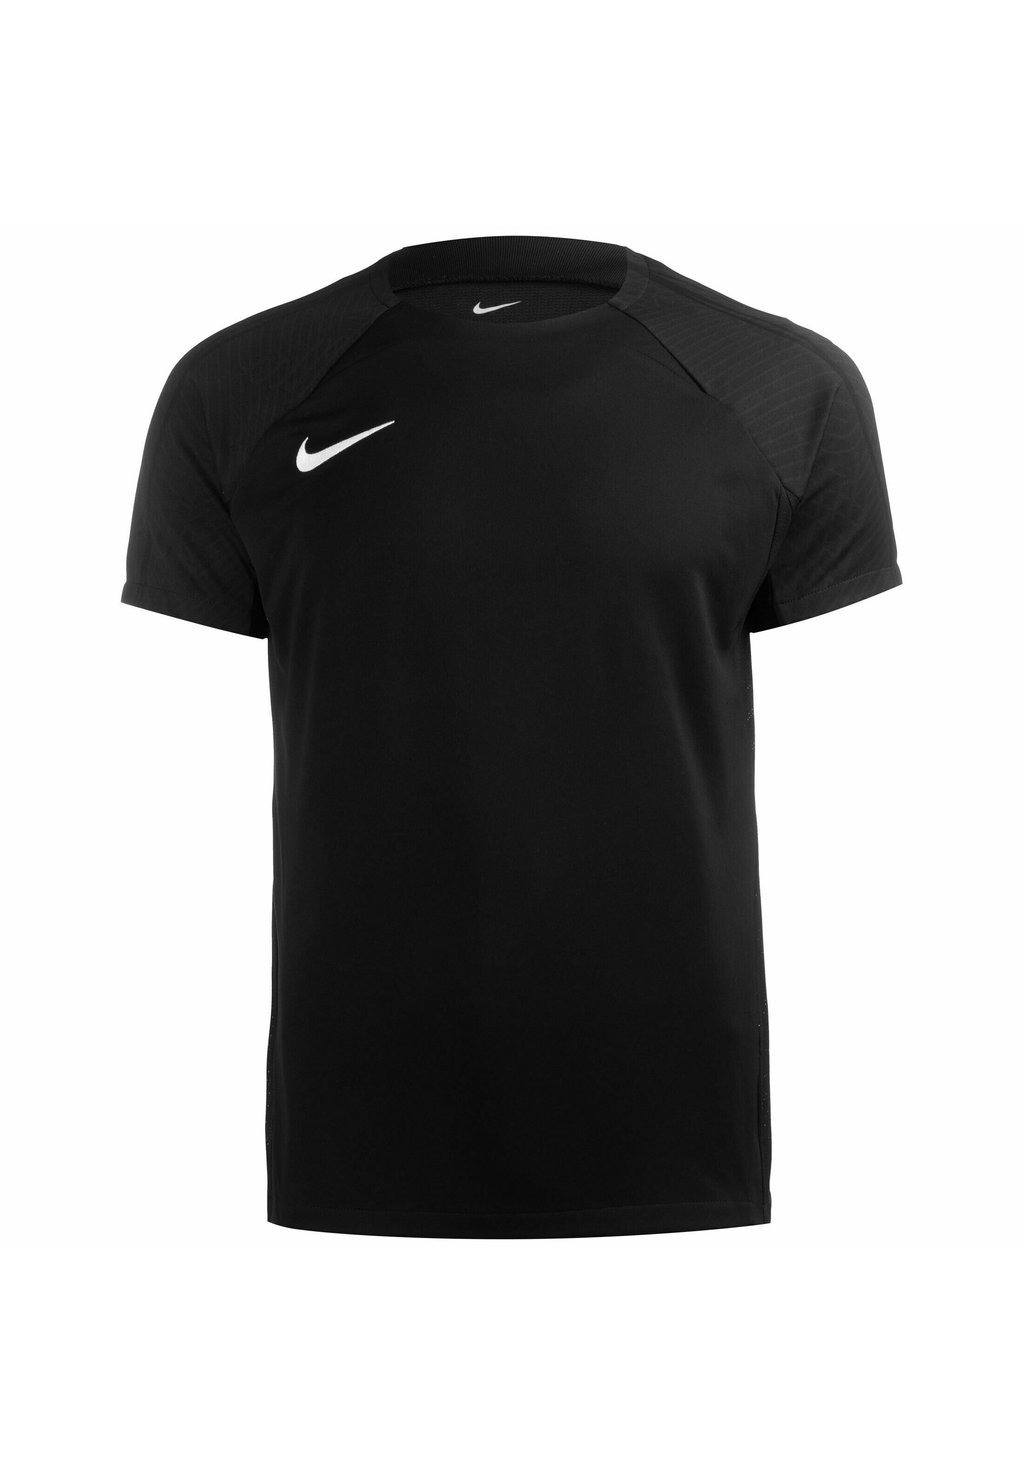 Спортивная футболка Strike Iii Fussball Nike, цвет black white